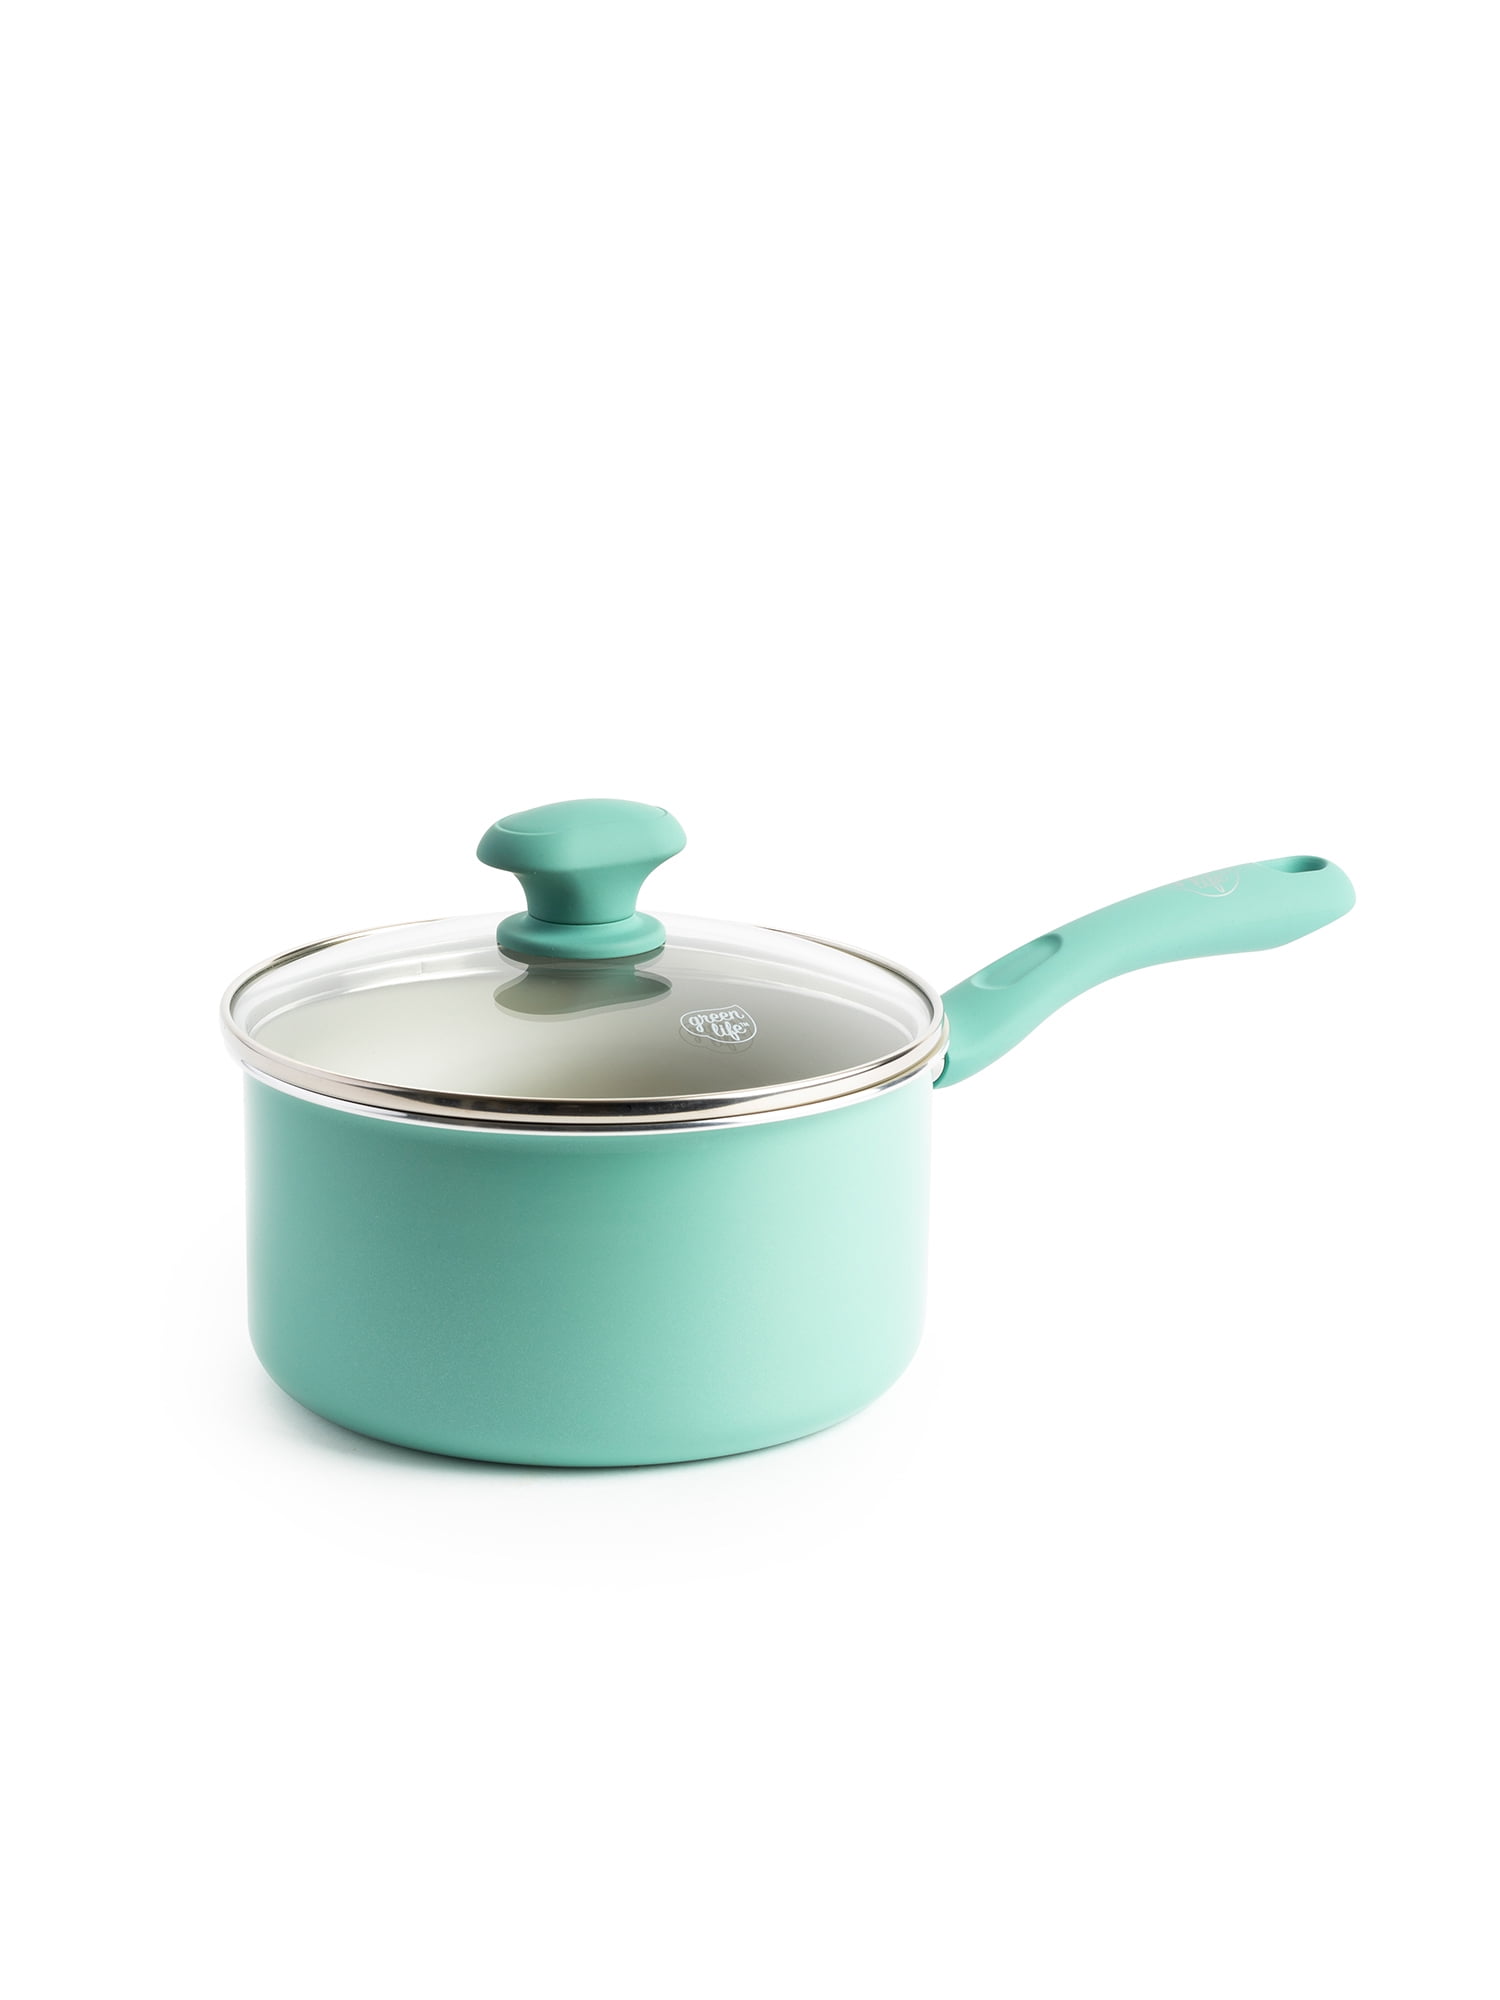 GreenLife Diamond Ceramic Non-Stick Open Frying Pan Set - Turquoise, 2 pc -  Kroger